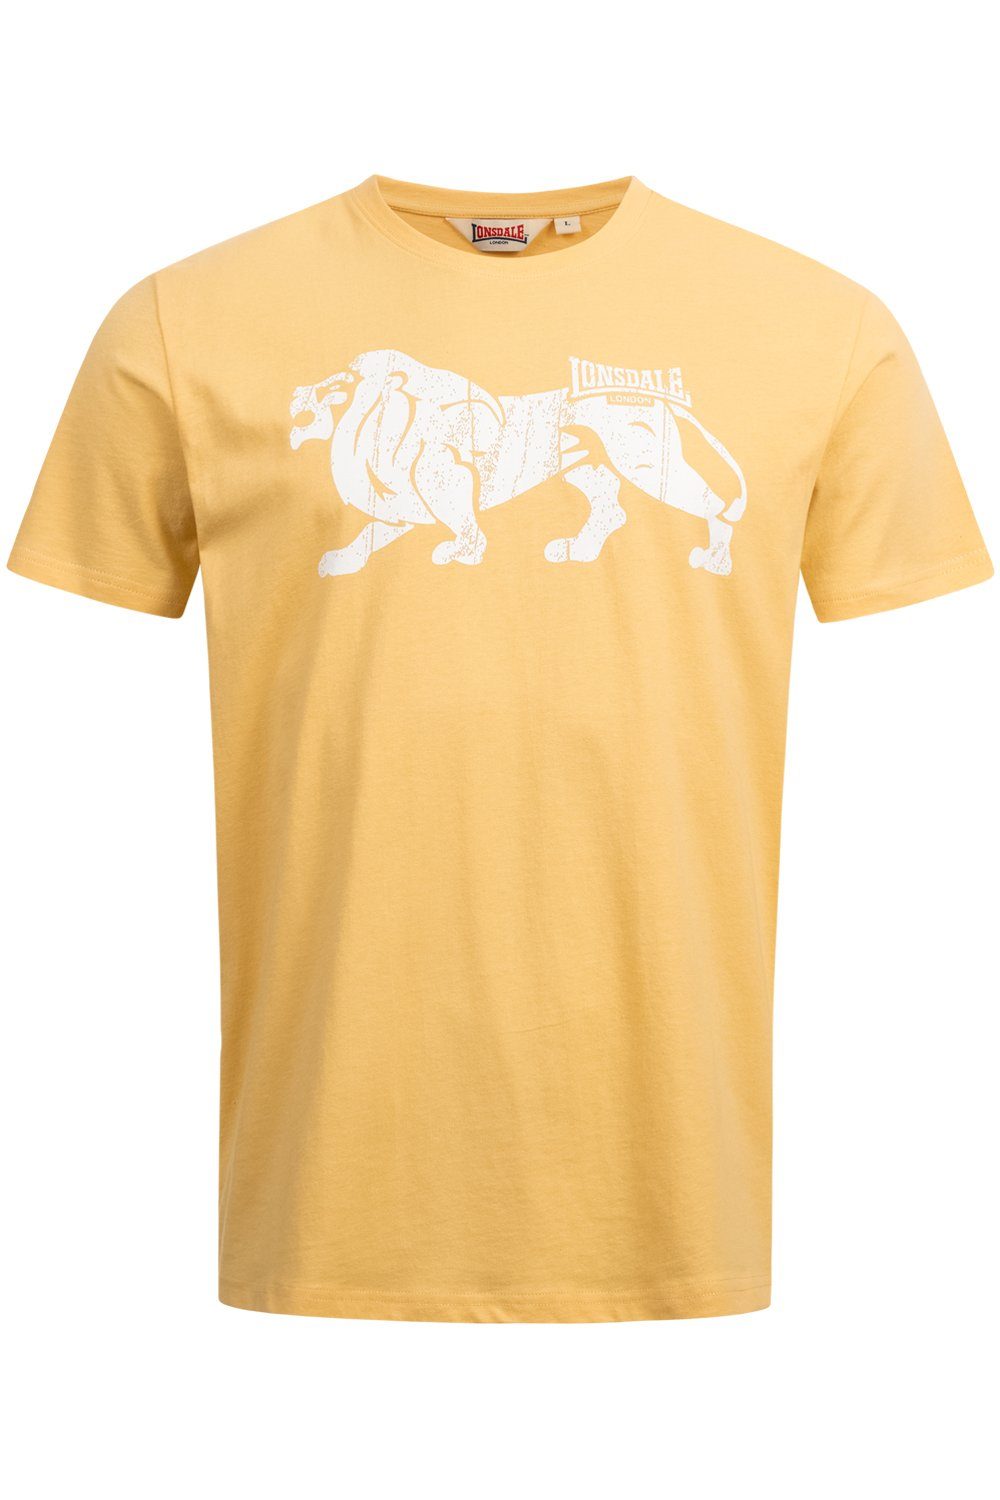 ENDMOOR T-Shirt Yellow/White Lonsdale Pastel